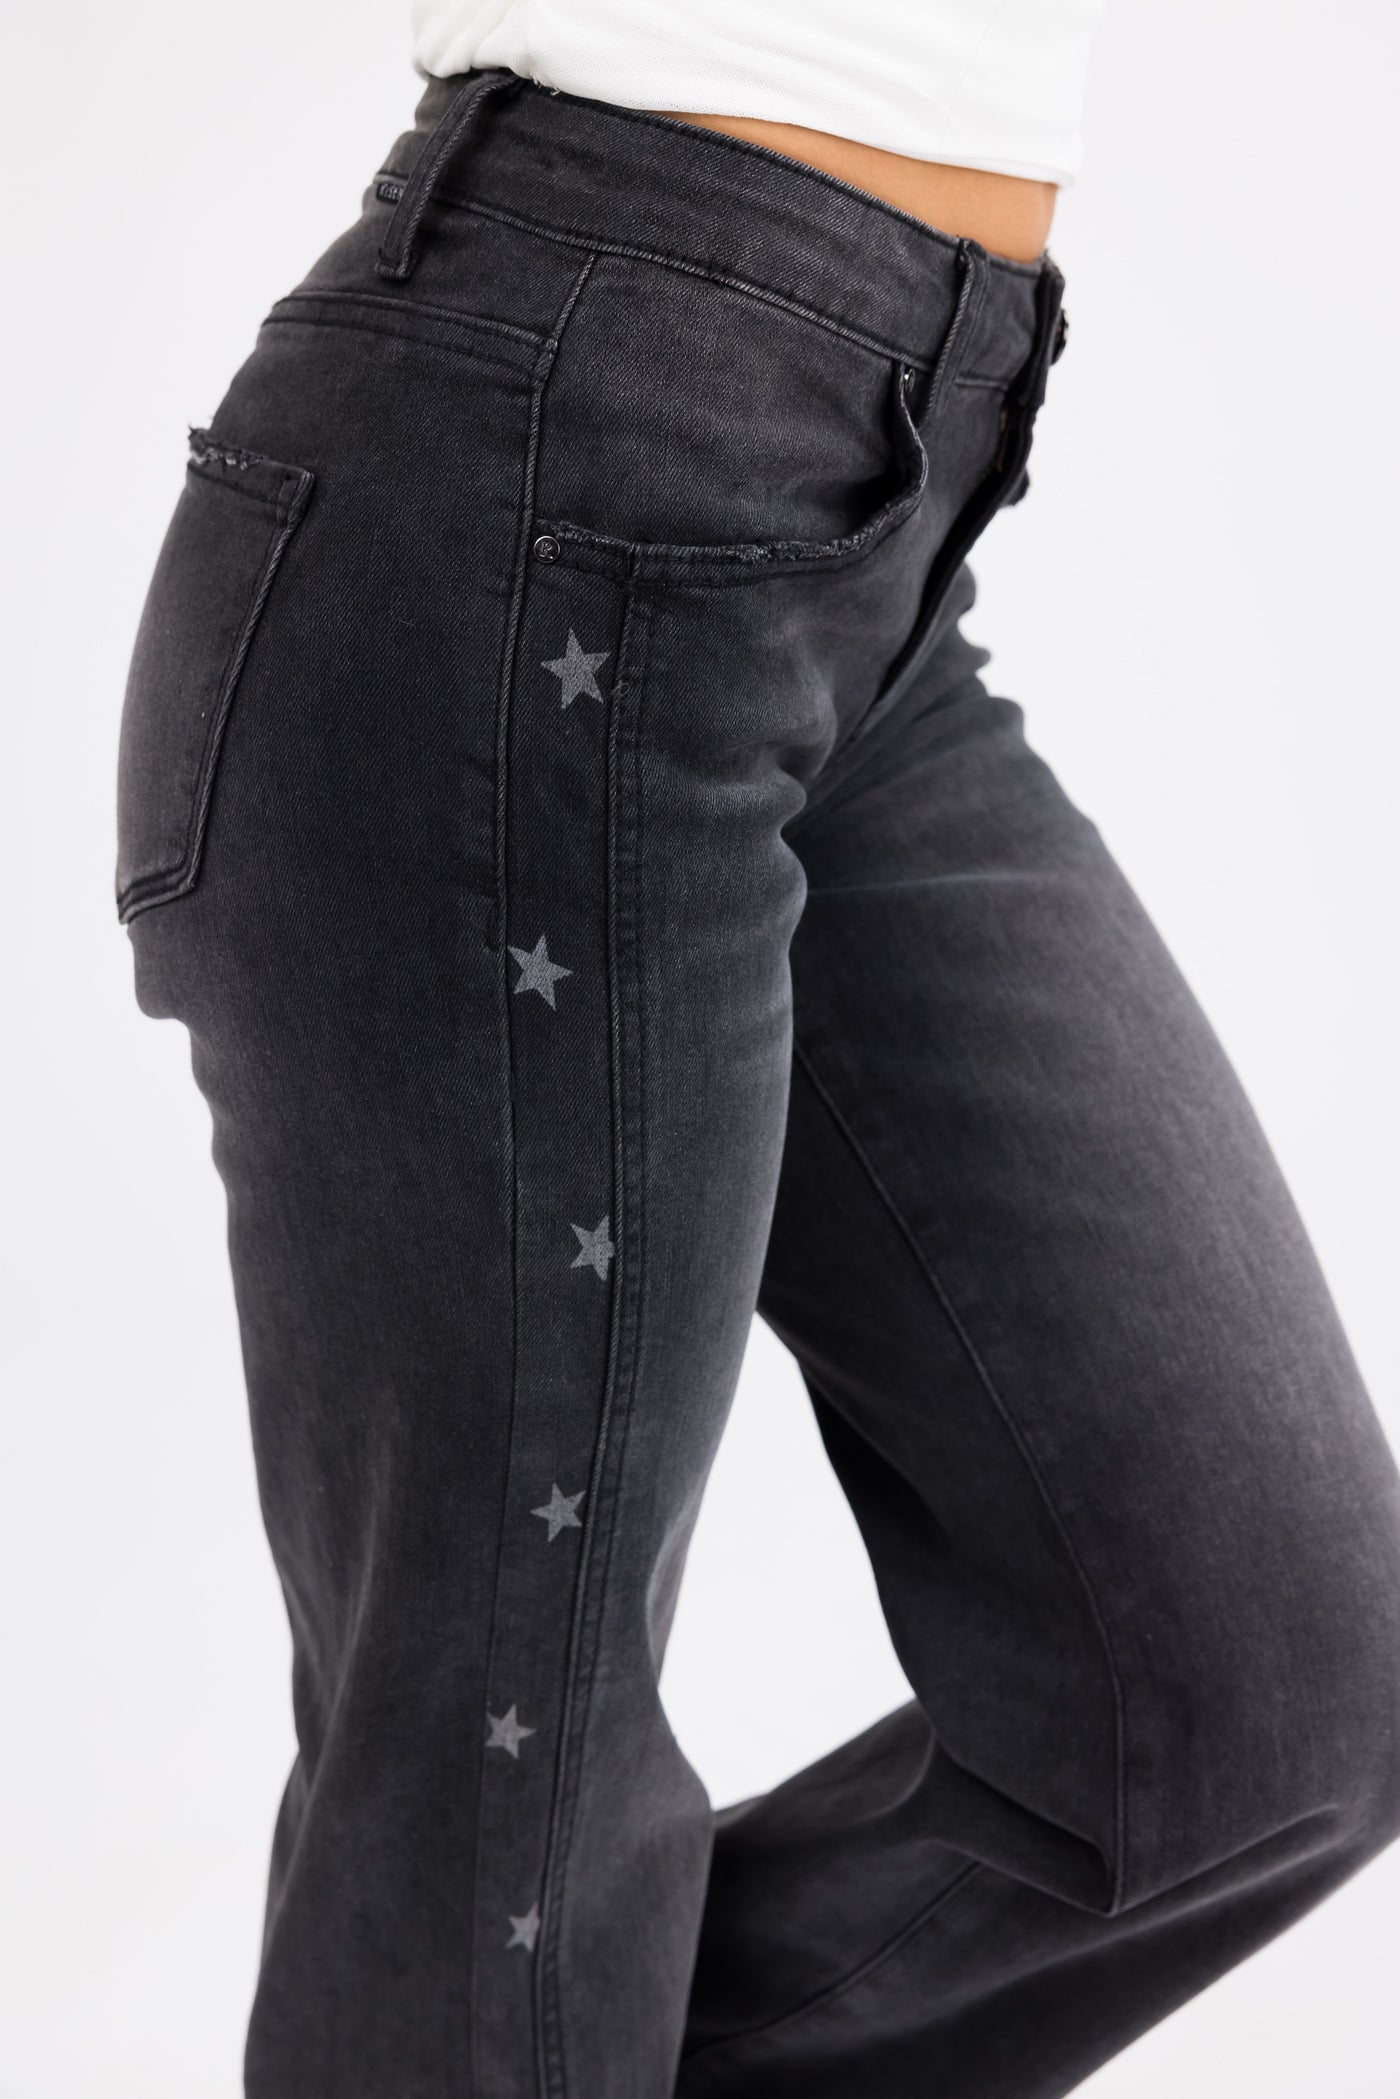 Risen Black Star Print Straight Jeans